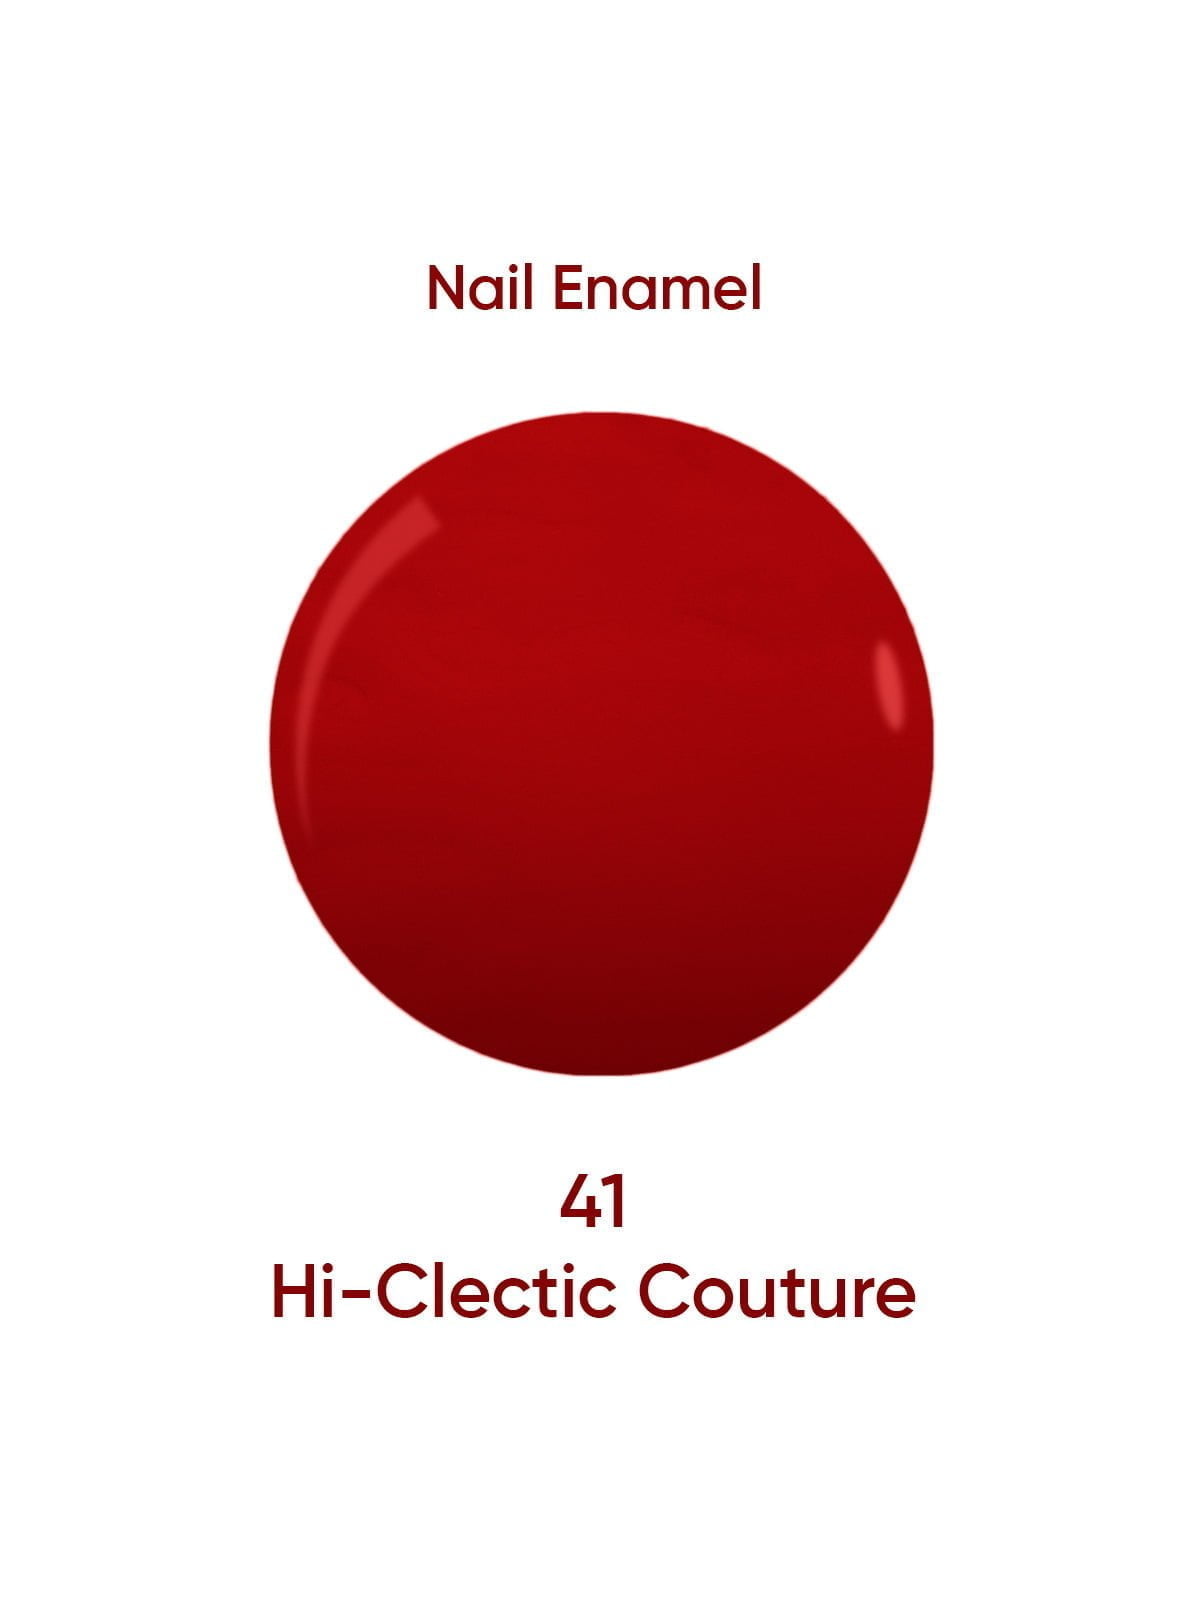 Nail Enamel 41 Hi-Clectic Couture